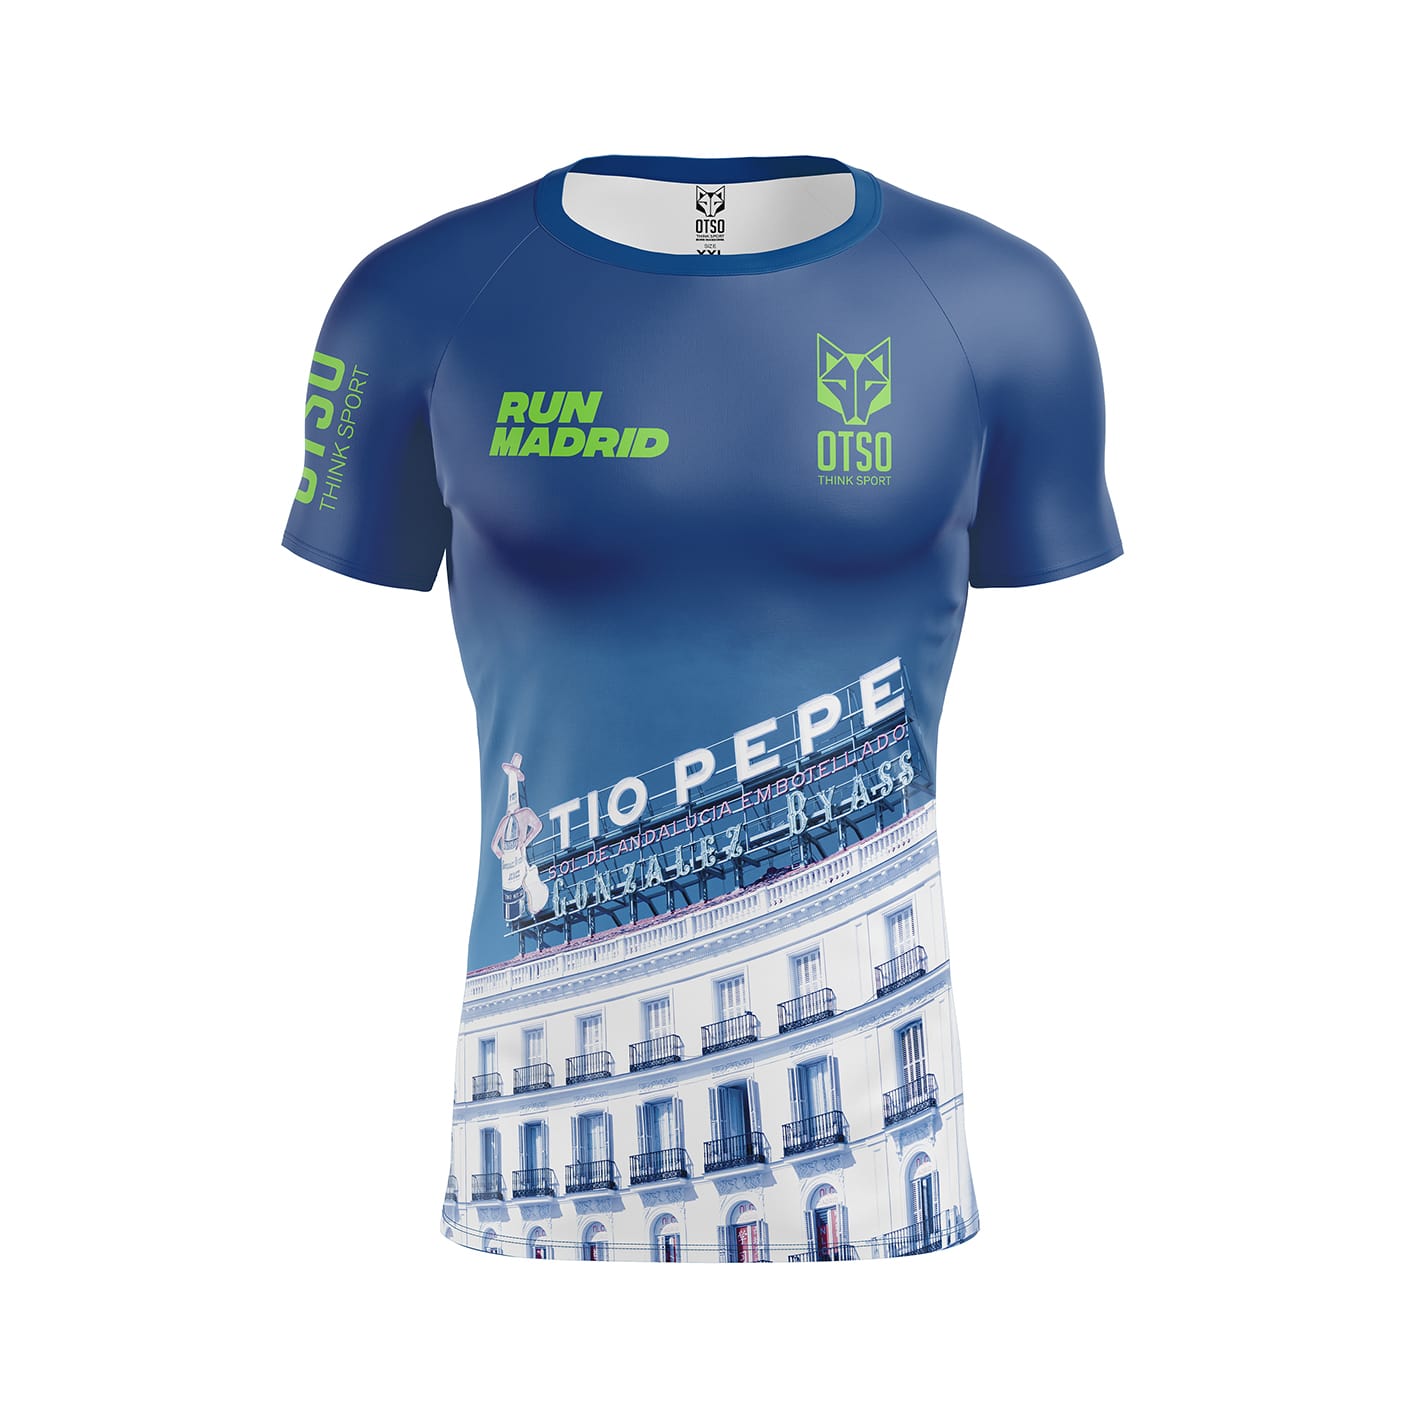 OTSO Camiseta Técnica Running Hombre Corta - Run Madrid Tio Pepe